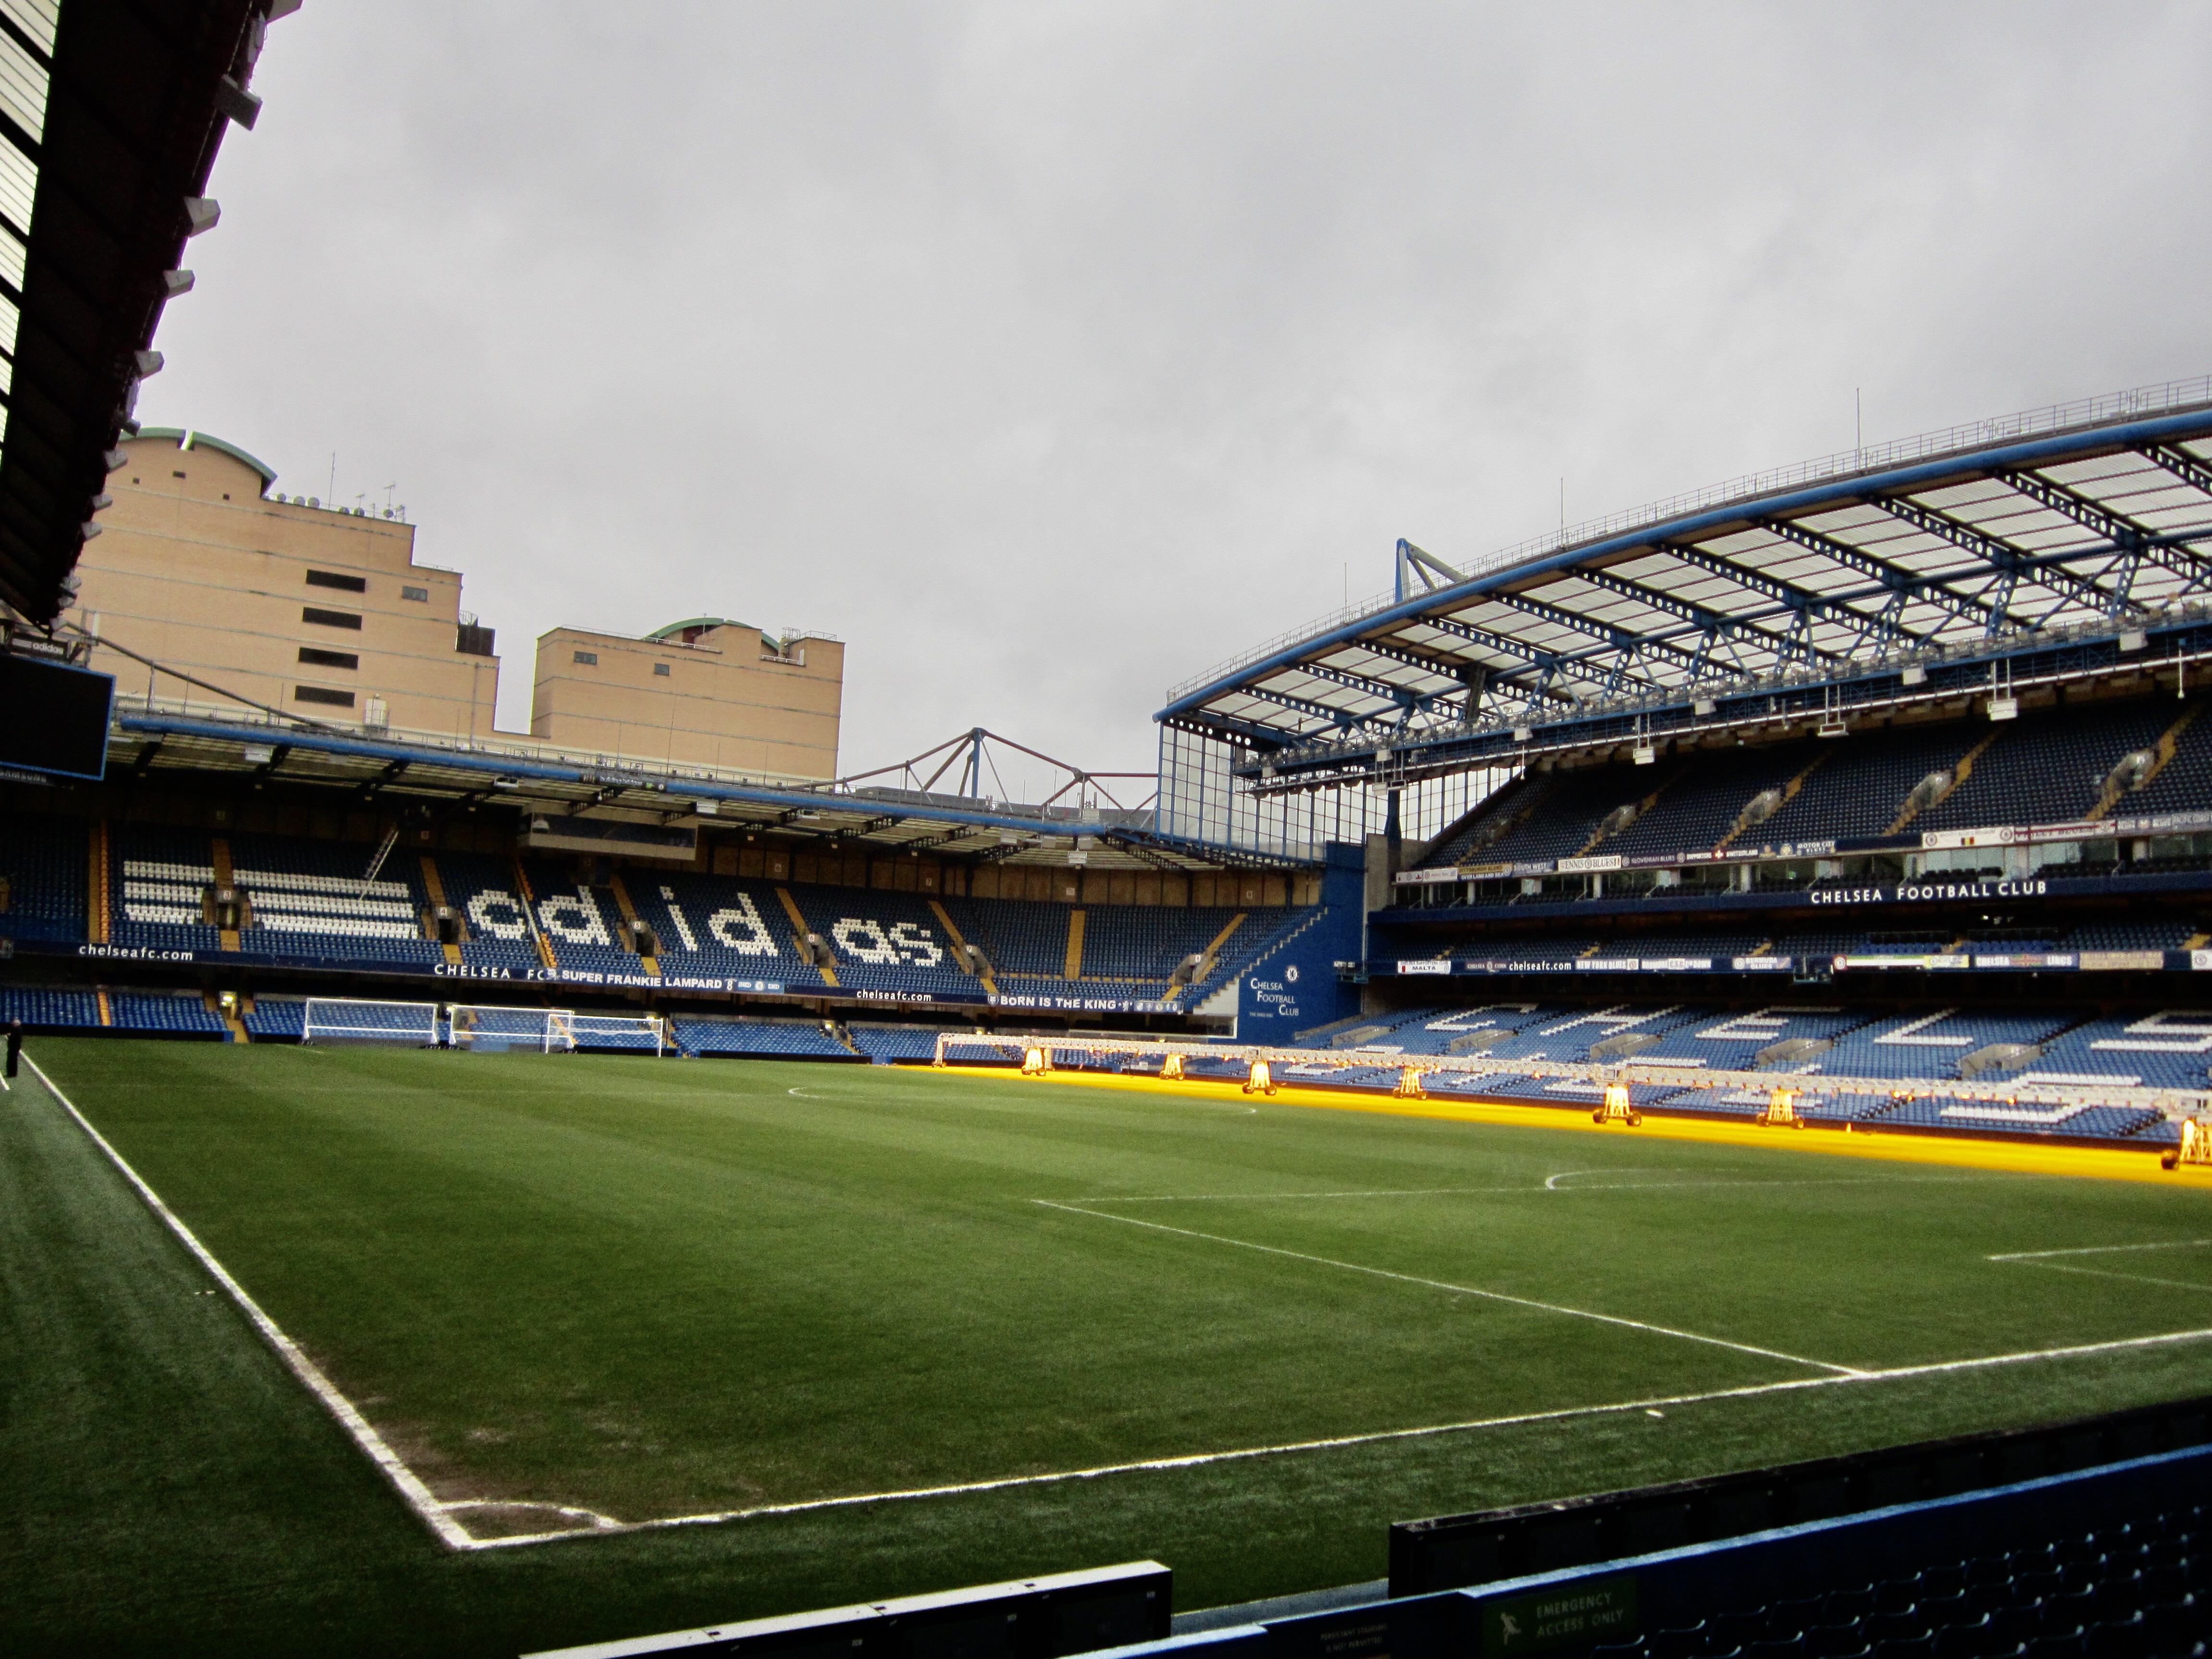 File:Chelsea Football Club, Stamford Bridge 08.jpg - Wikimedia Commons